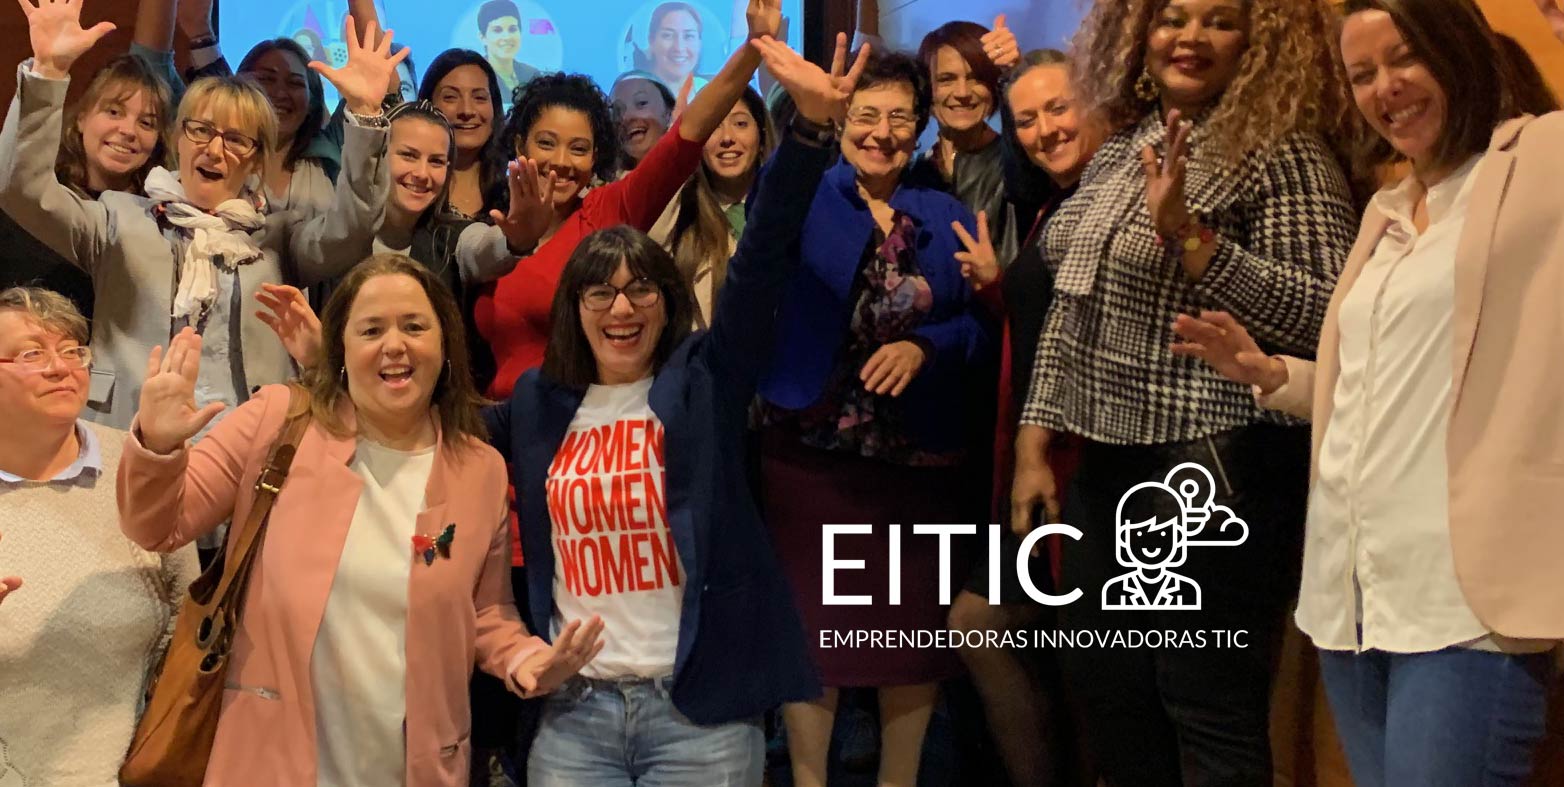 Promoting female entrepreneurship with EITIC pilots